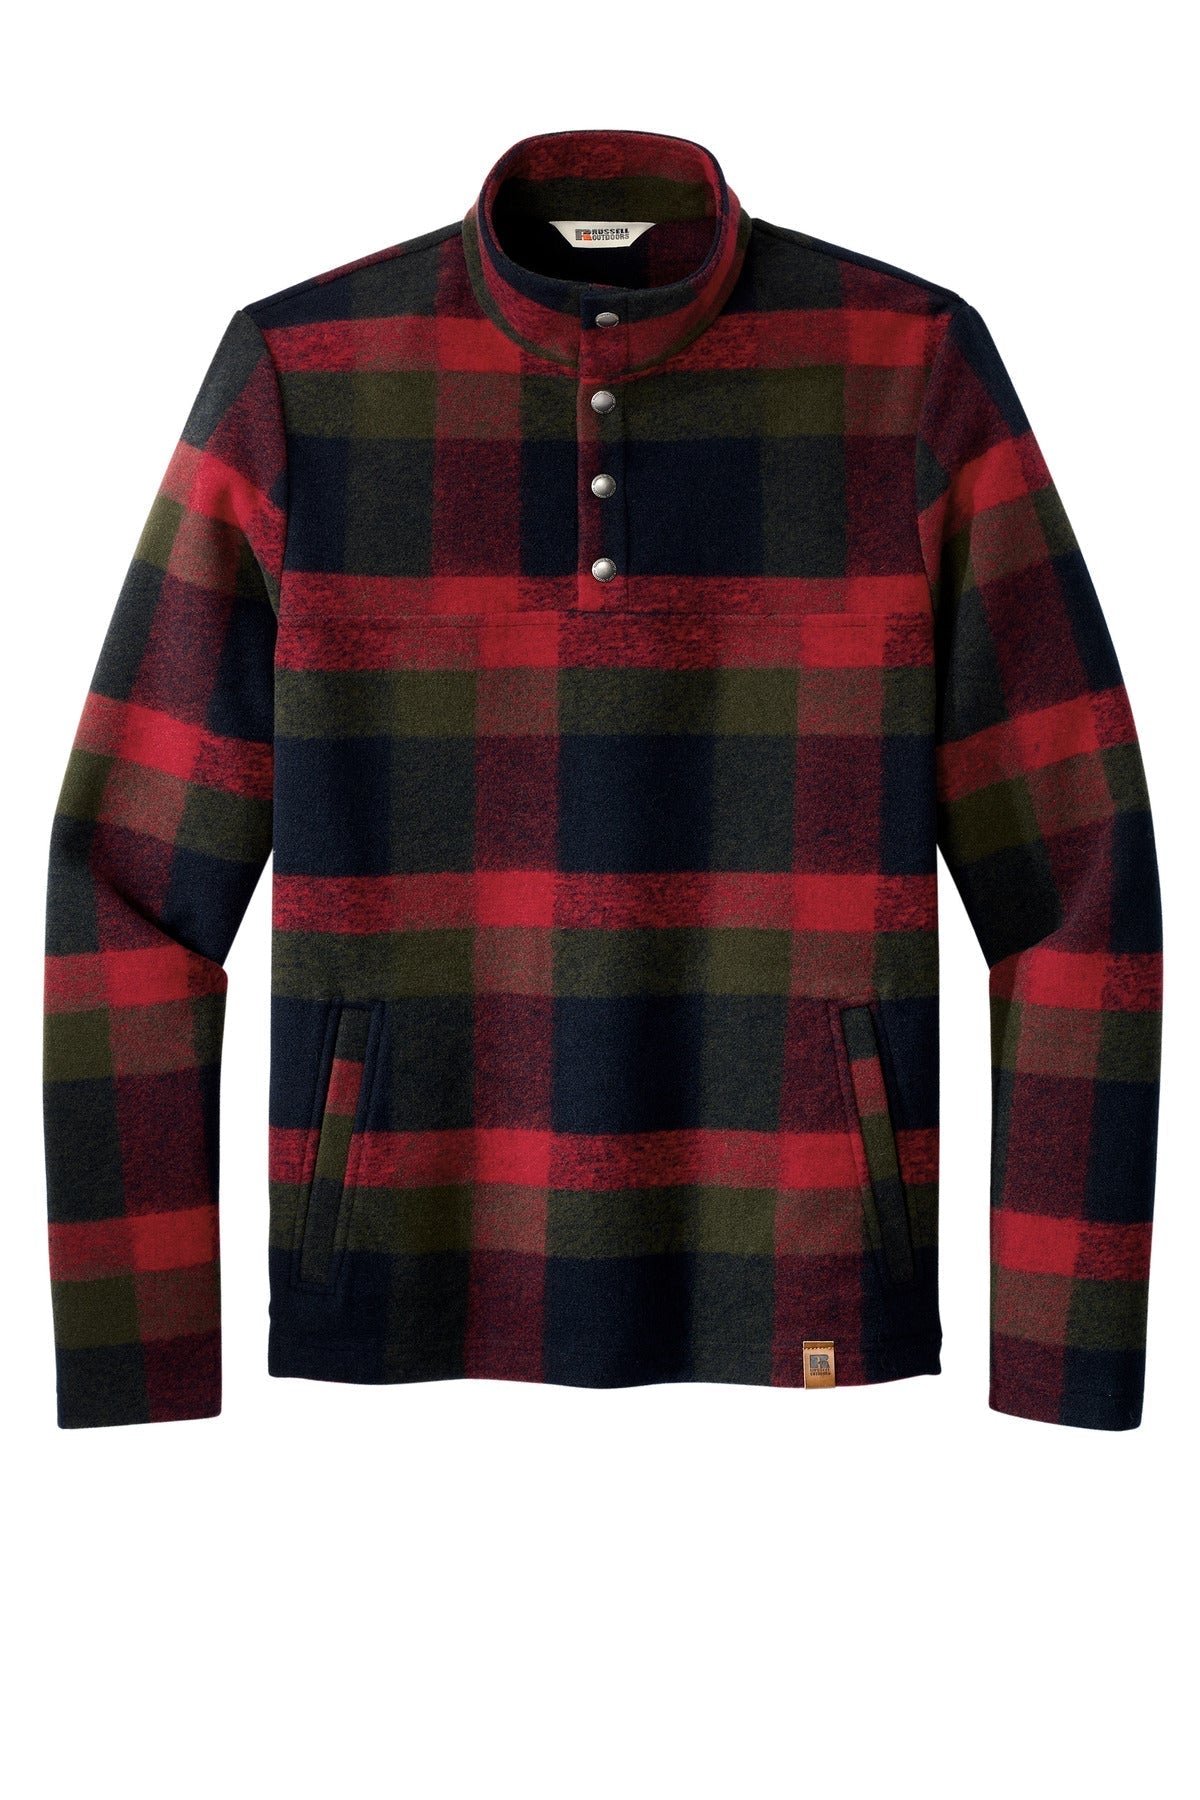 Russell Outdoors Basin Snap Pullover RU551 RU551 - BT Imprintables Shirts